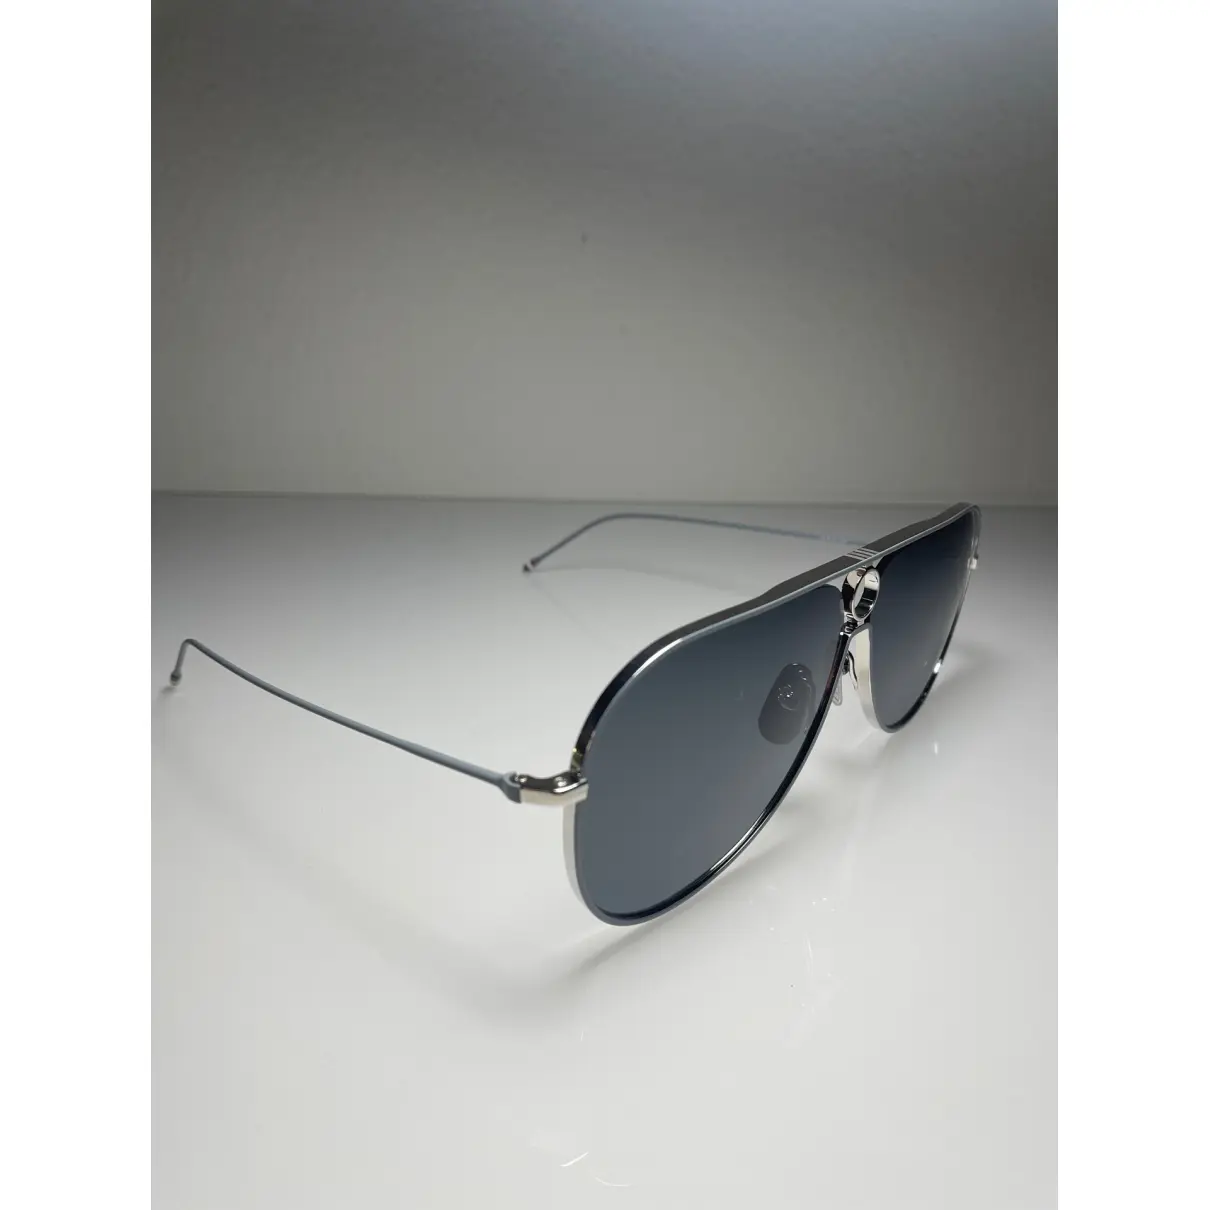 Buy Thom Browne Sunglasses online